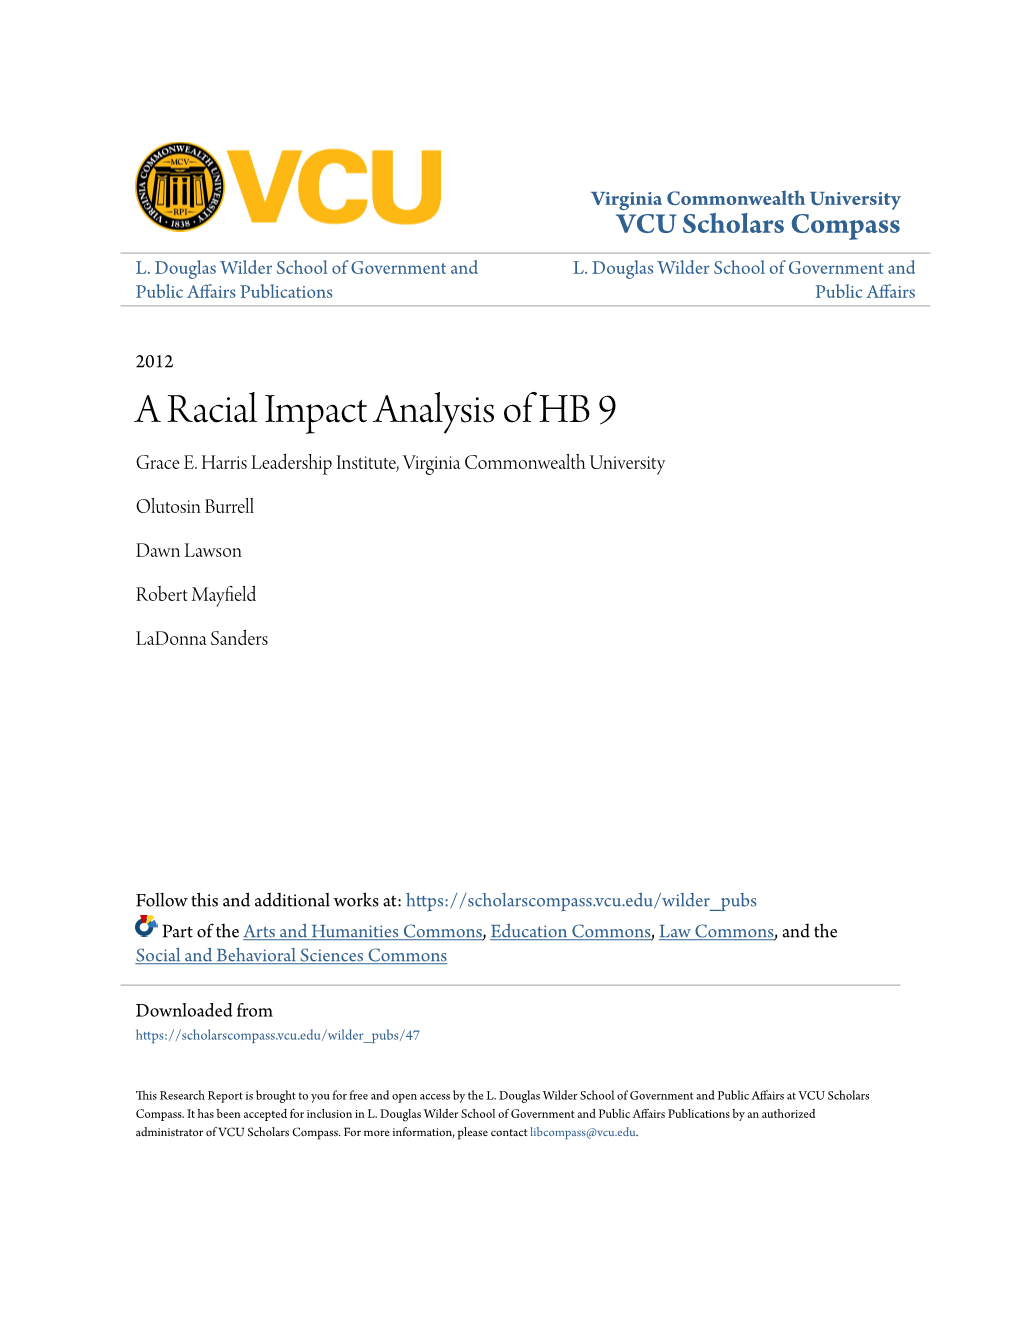 A Racial Impact Analysis of HB 9 Grace E